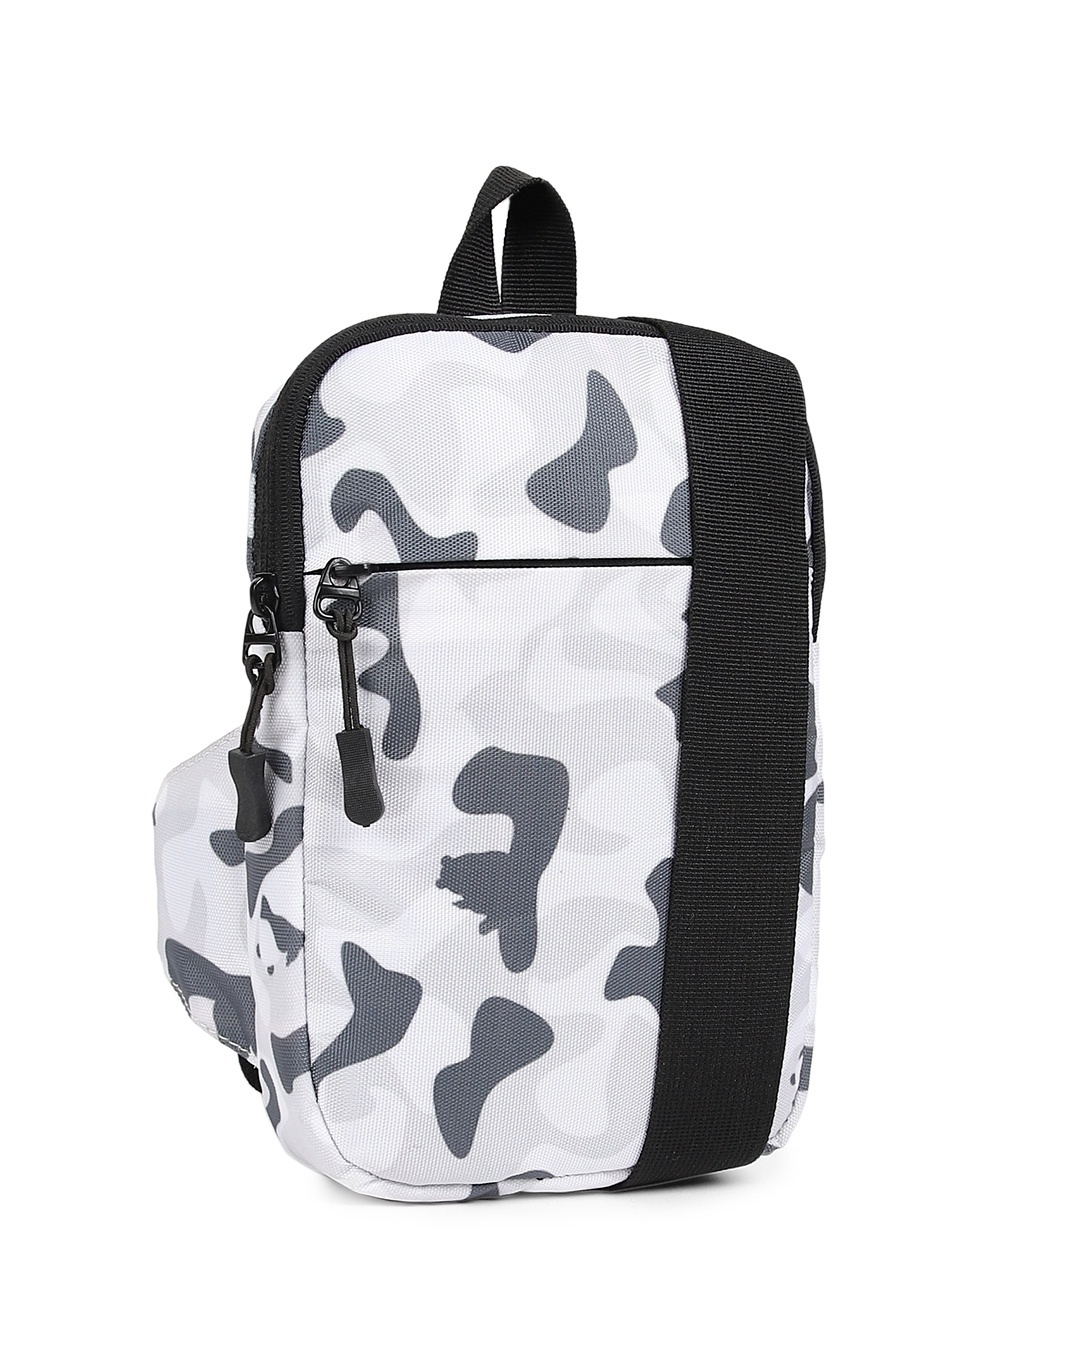 Shop Unisex White Camouflage Sling Bag-Design